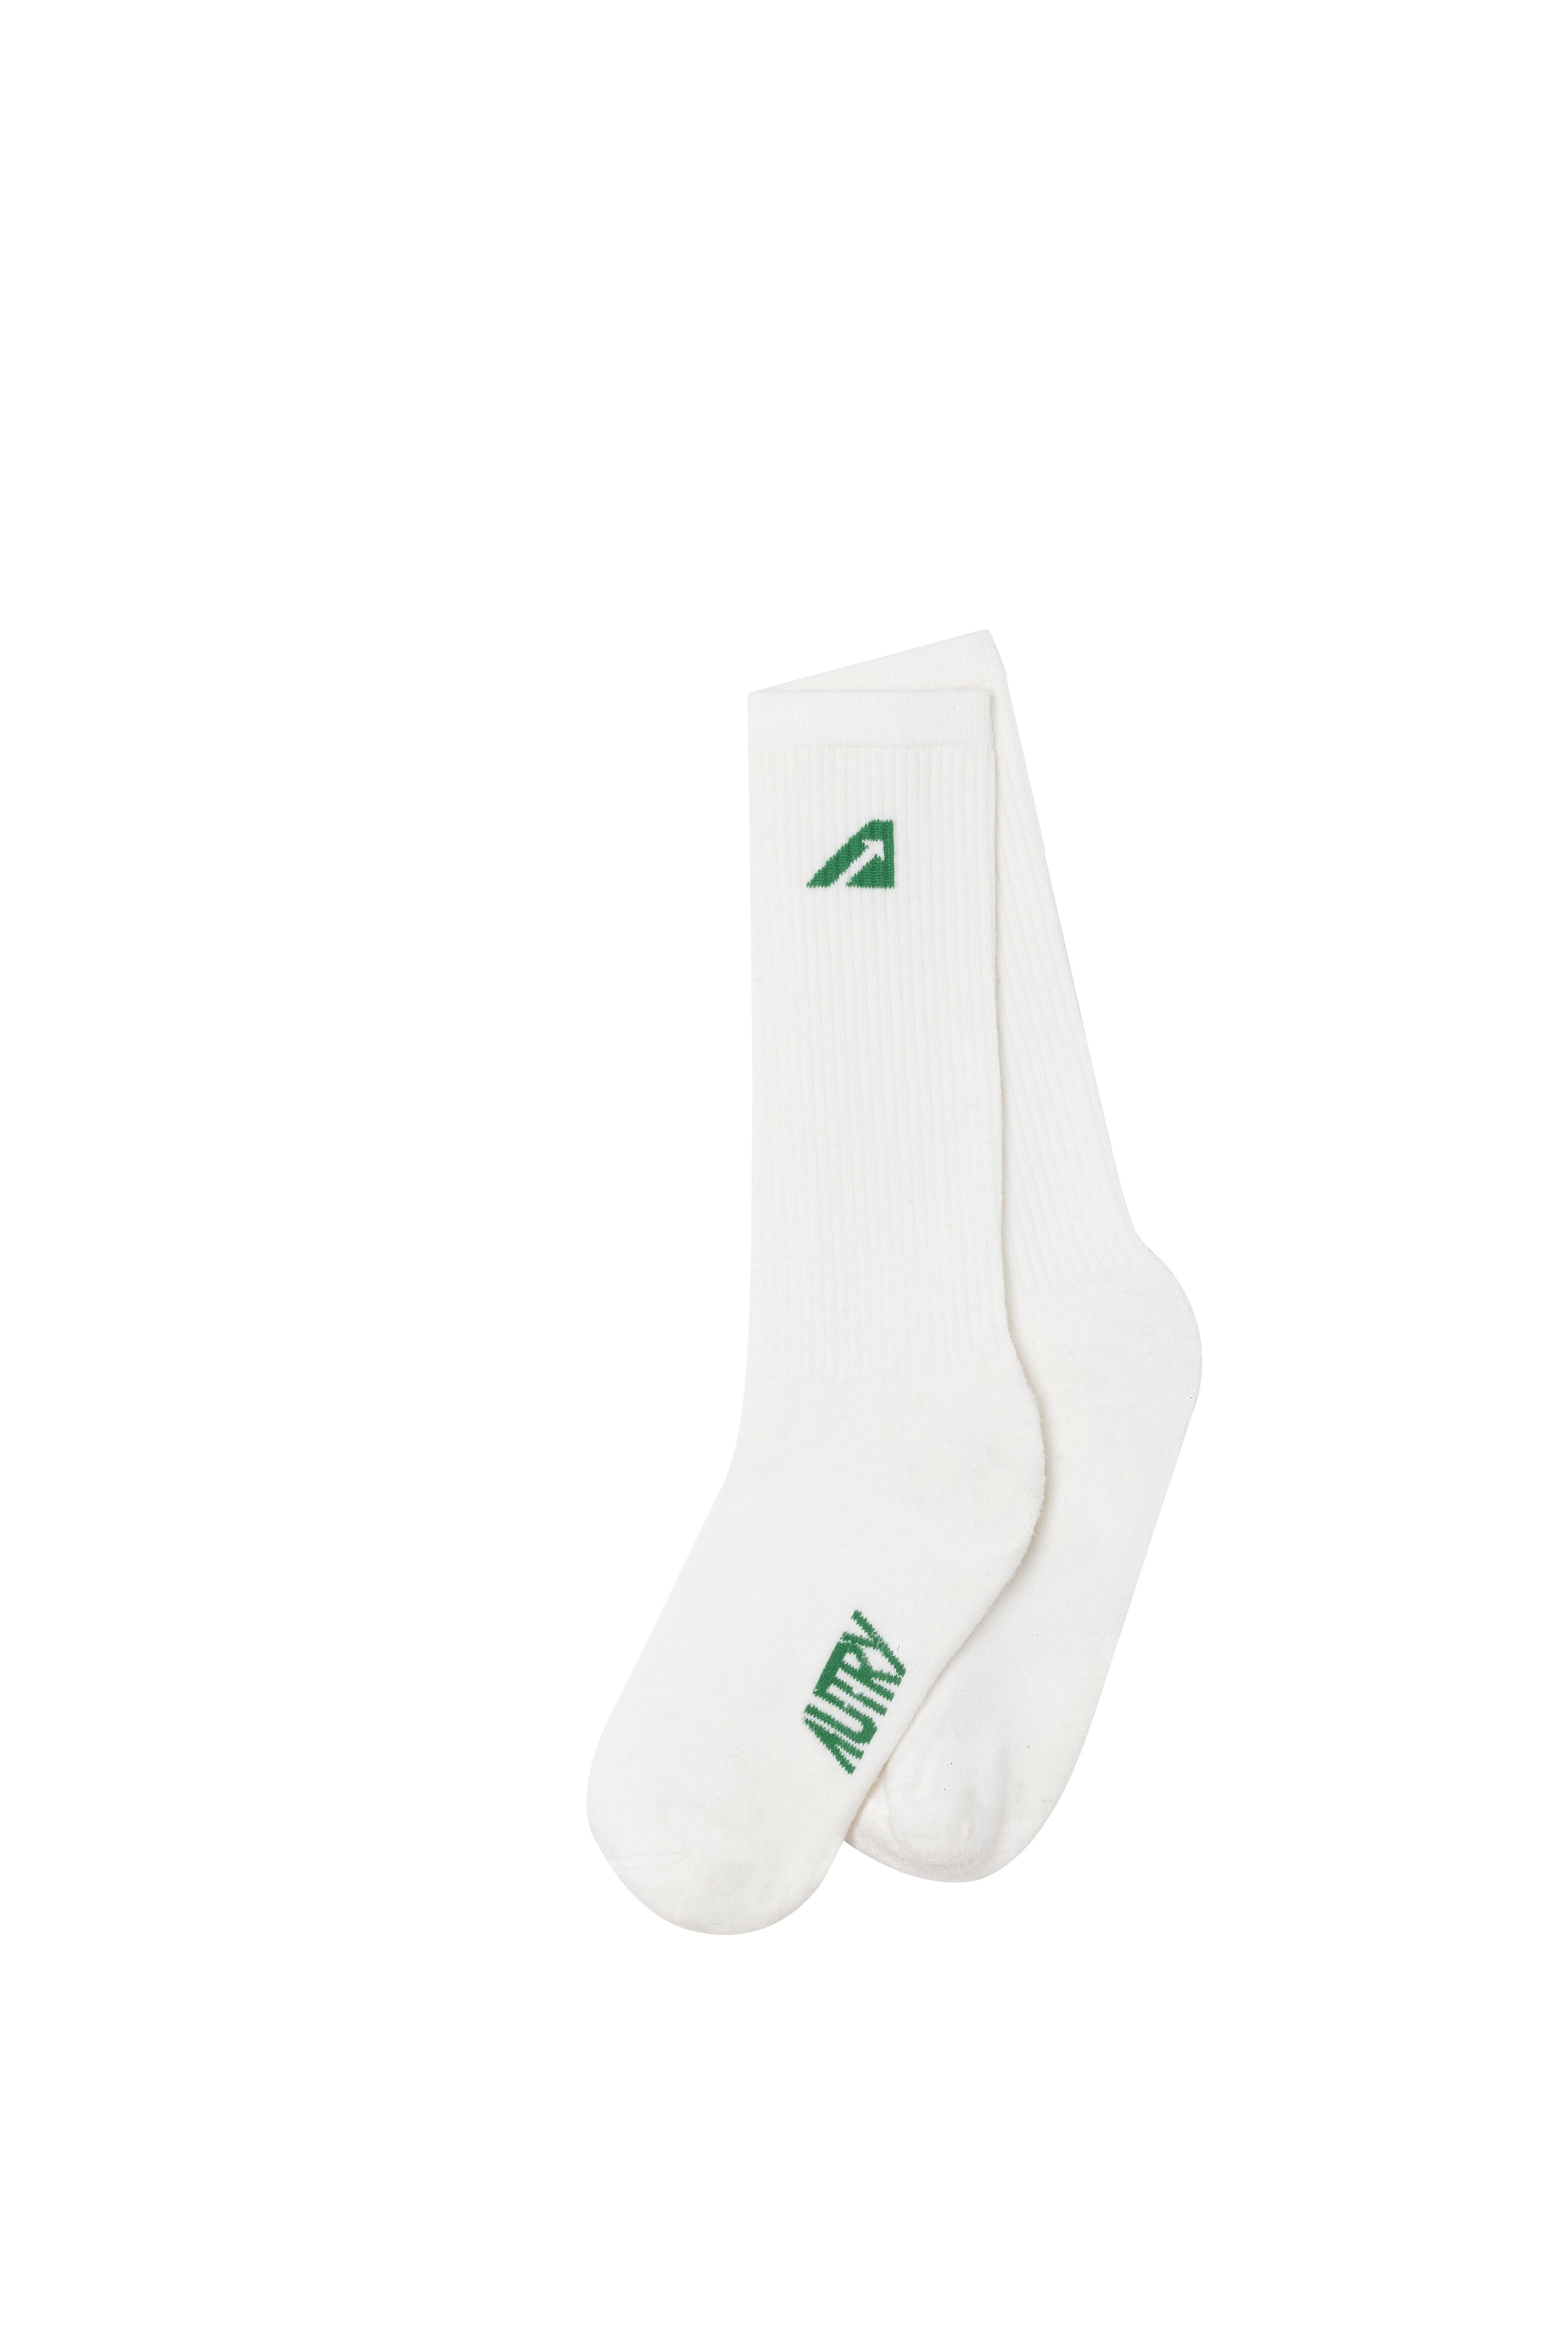 AUTRY - SOPU 64WG - Autry Socks - Bianco Verde Scarpe Uomo AUTRY - Collezione uomo 